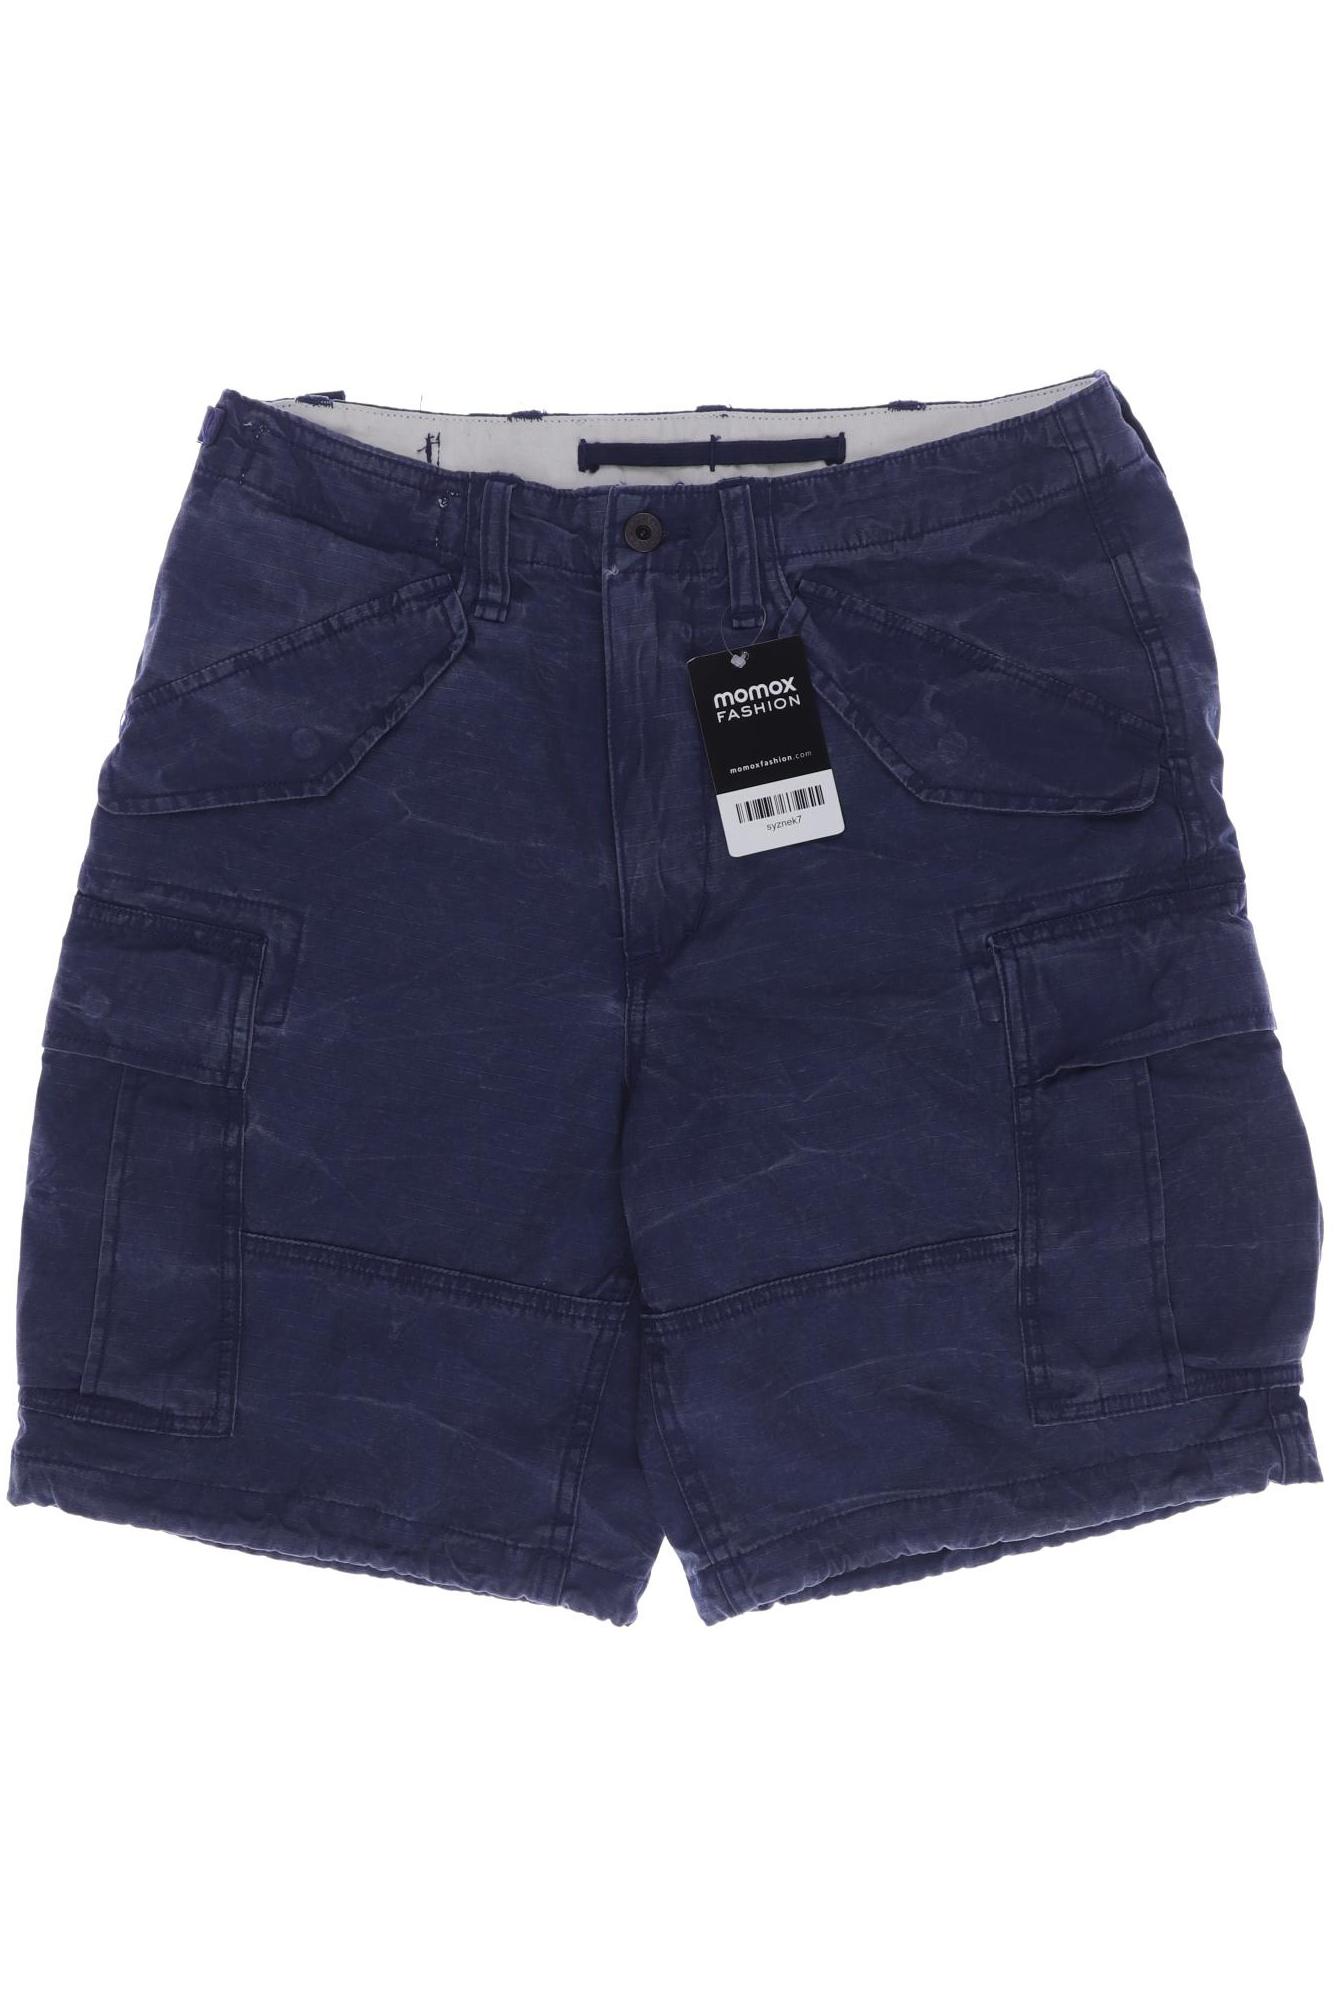 Polo Ralph Lauren Herren Shorts, marineblau von Polo Ralph Lauren